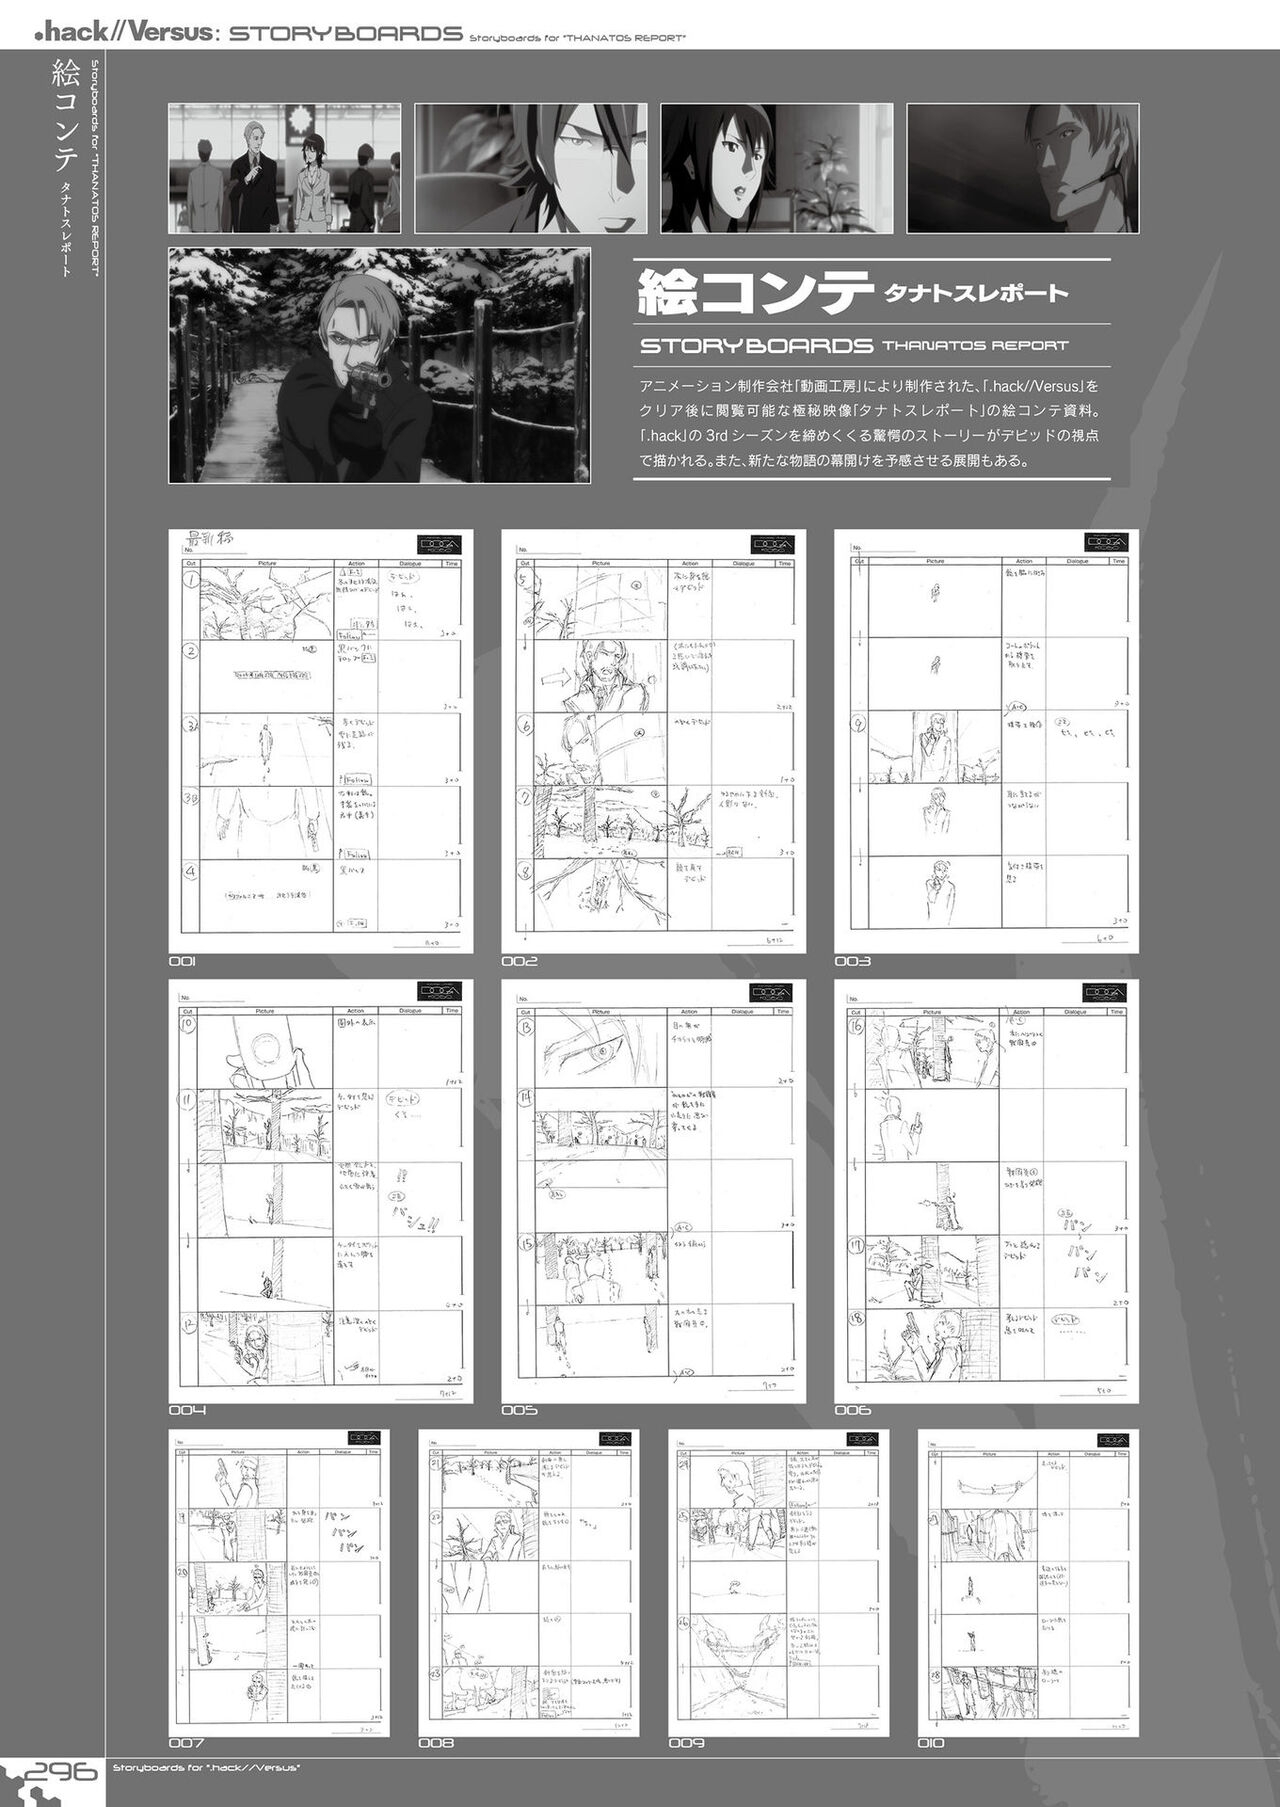 Dot Hack Sekai-no Muko ni  +Versus Complete Set  Documentation .hack //Archives _ 05 298